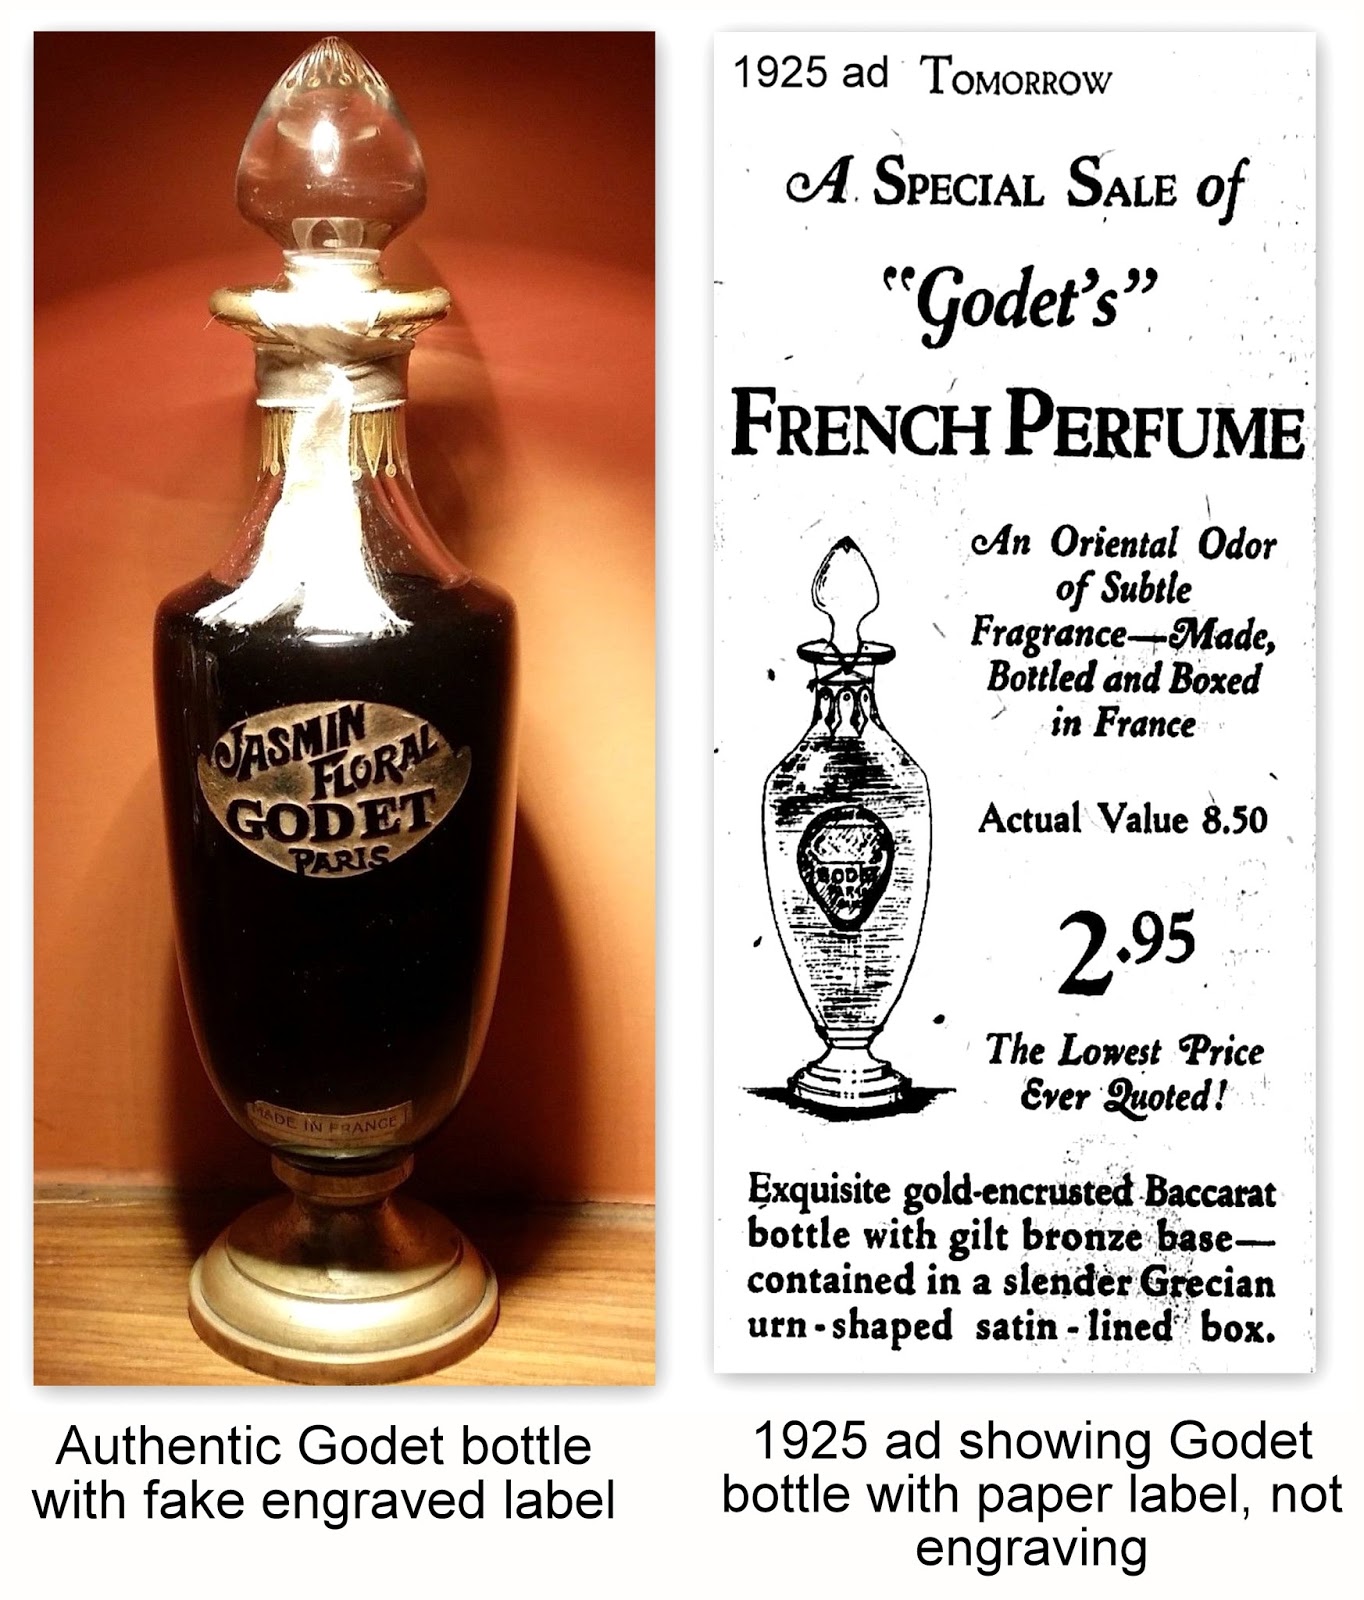 Cleopatra's Boudoir: Faking Perfume Bottles to Increase Their Value